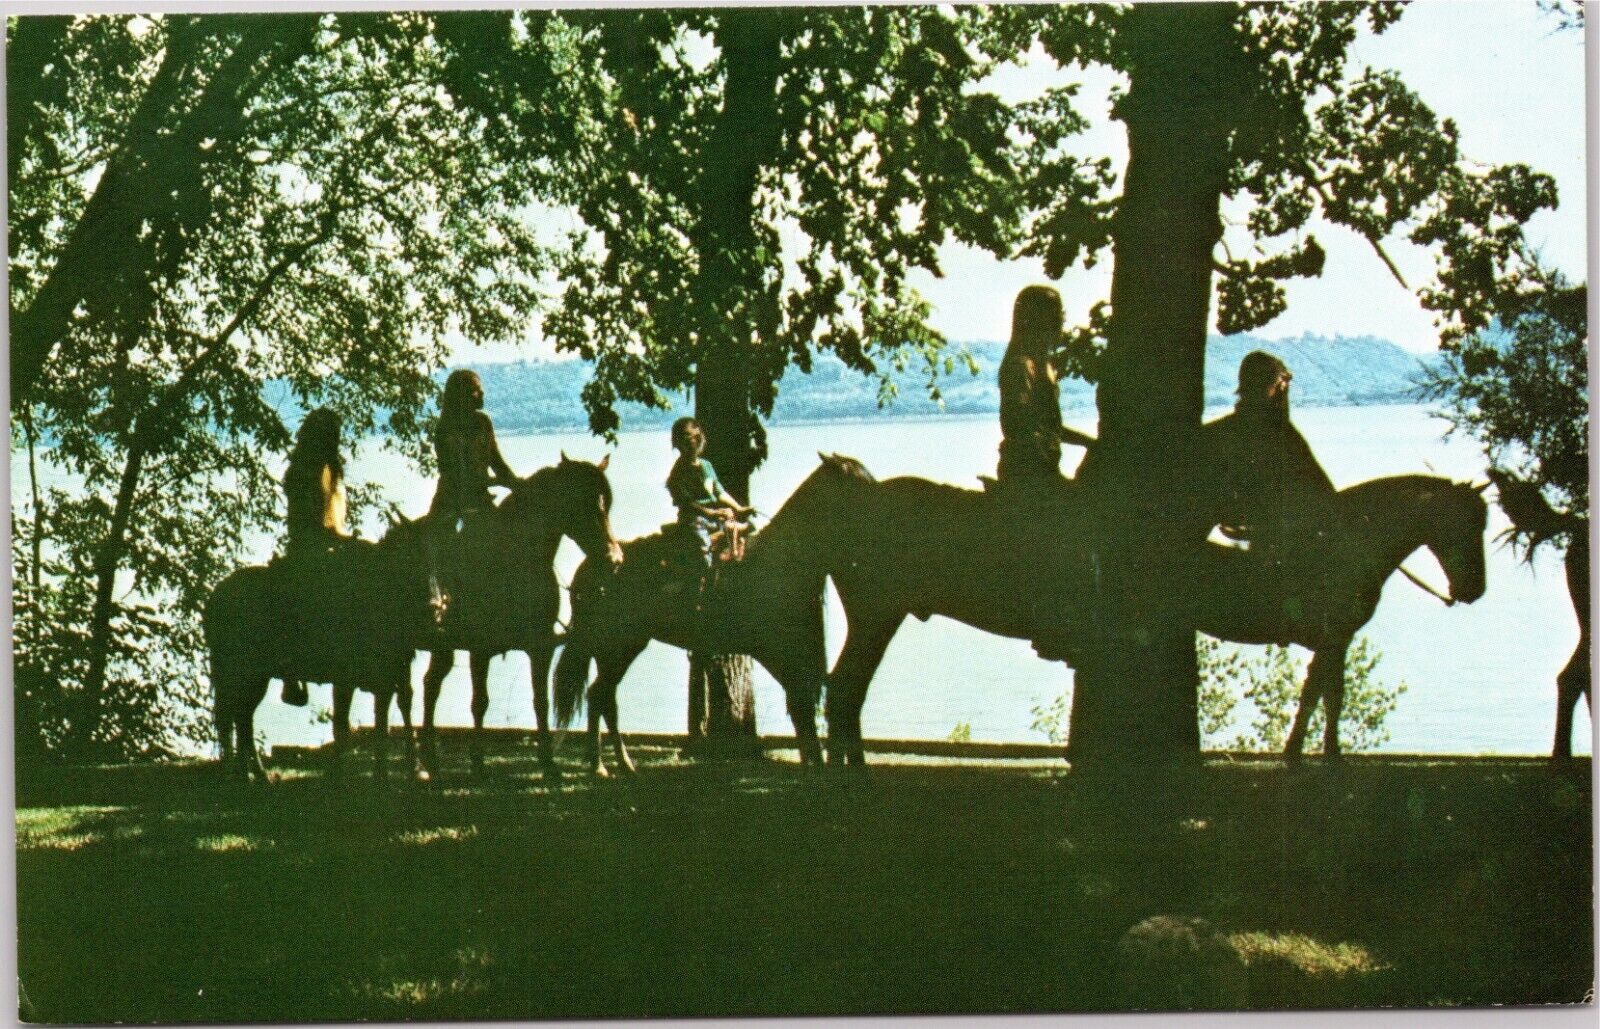 Camp Villa Maria - people on horseback - Frontenac Minnesota